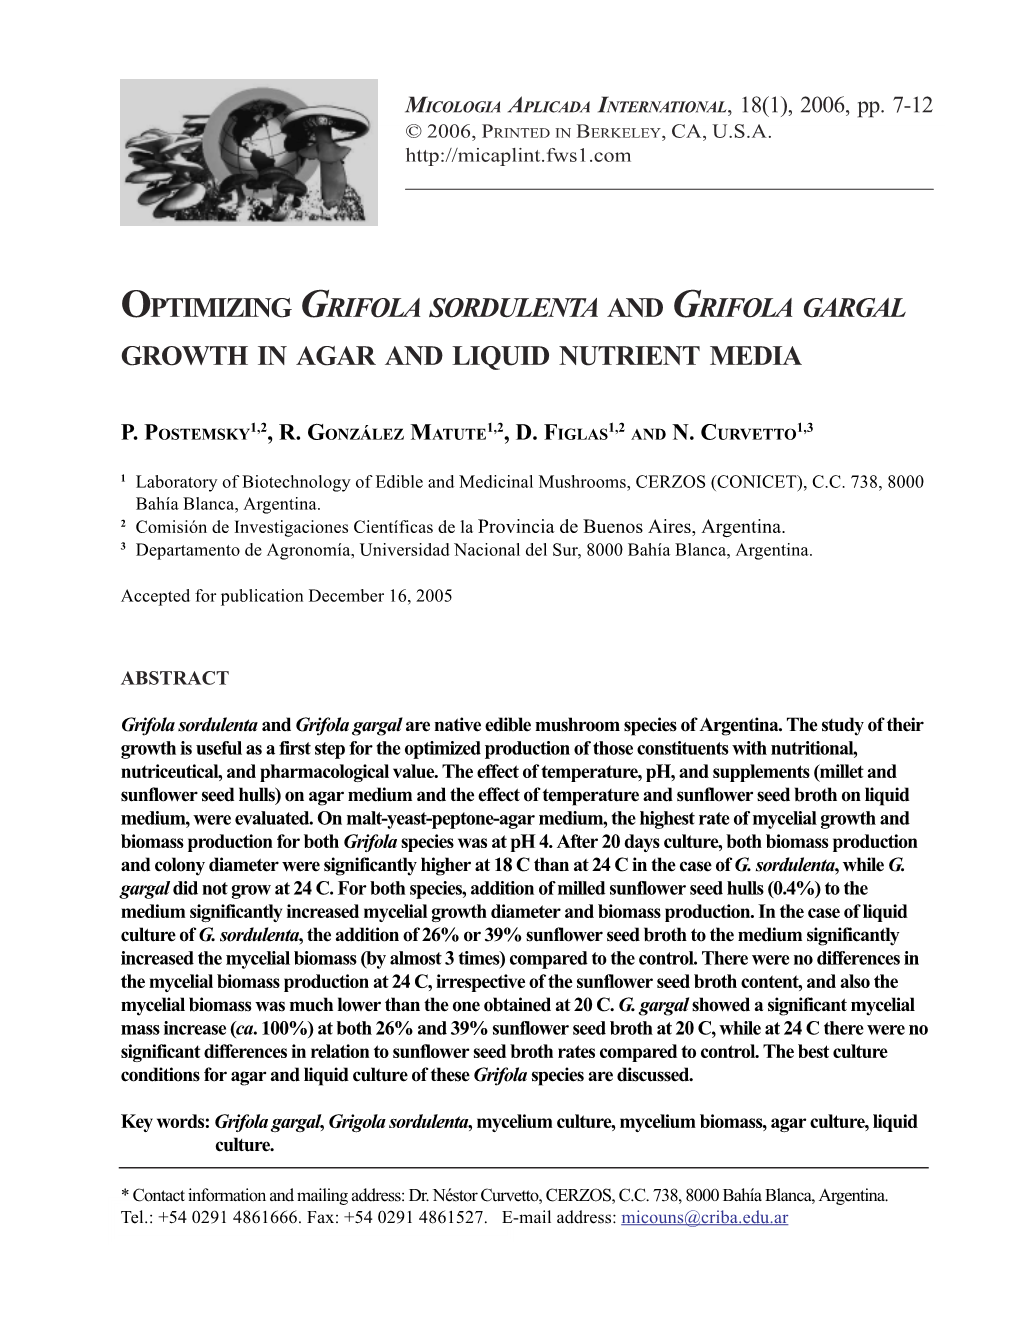 Optimizing Grifola Sordulenta and Grifola Gargal Growth in Agar and Liquid Nutrient Media